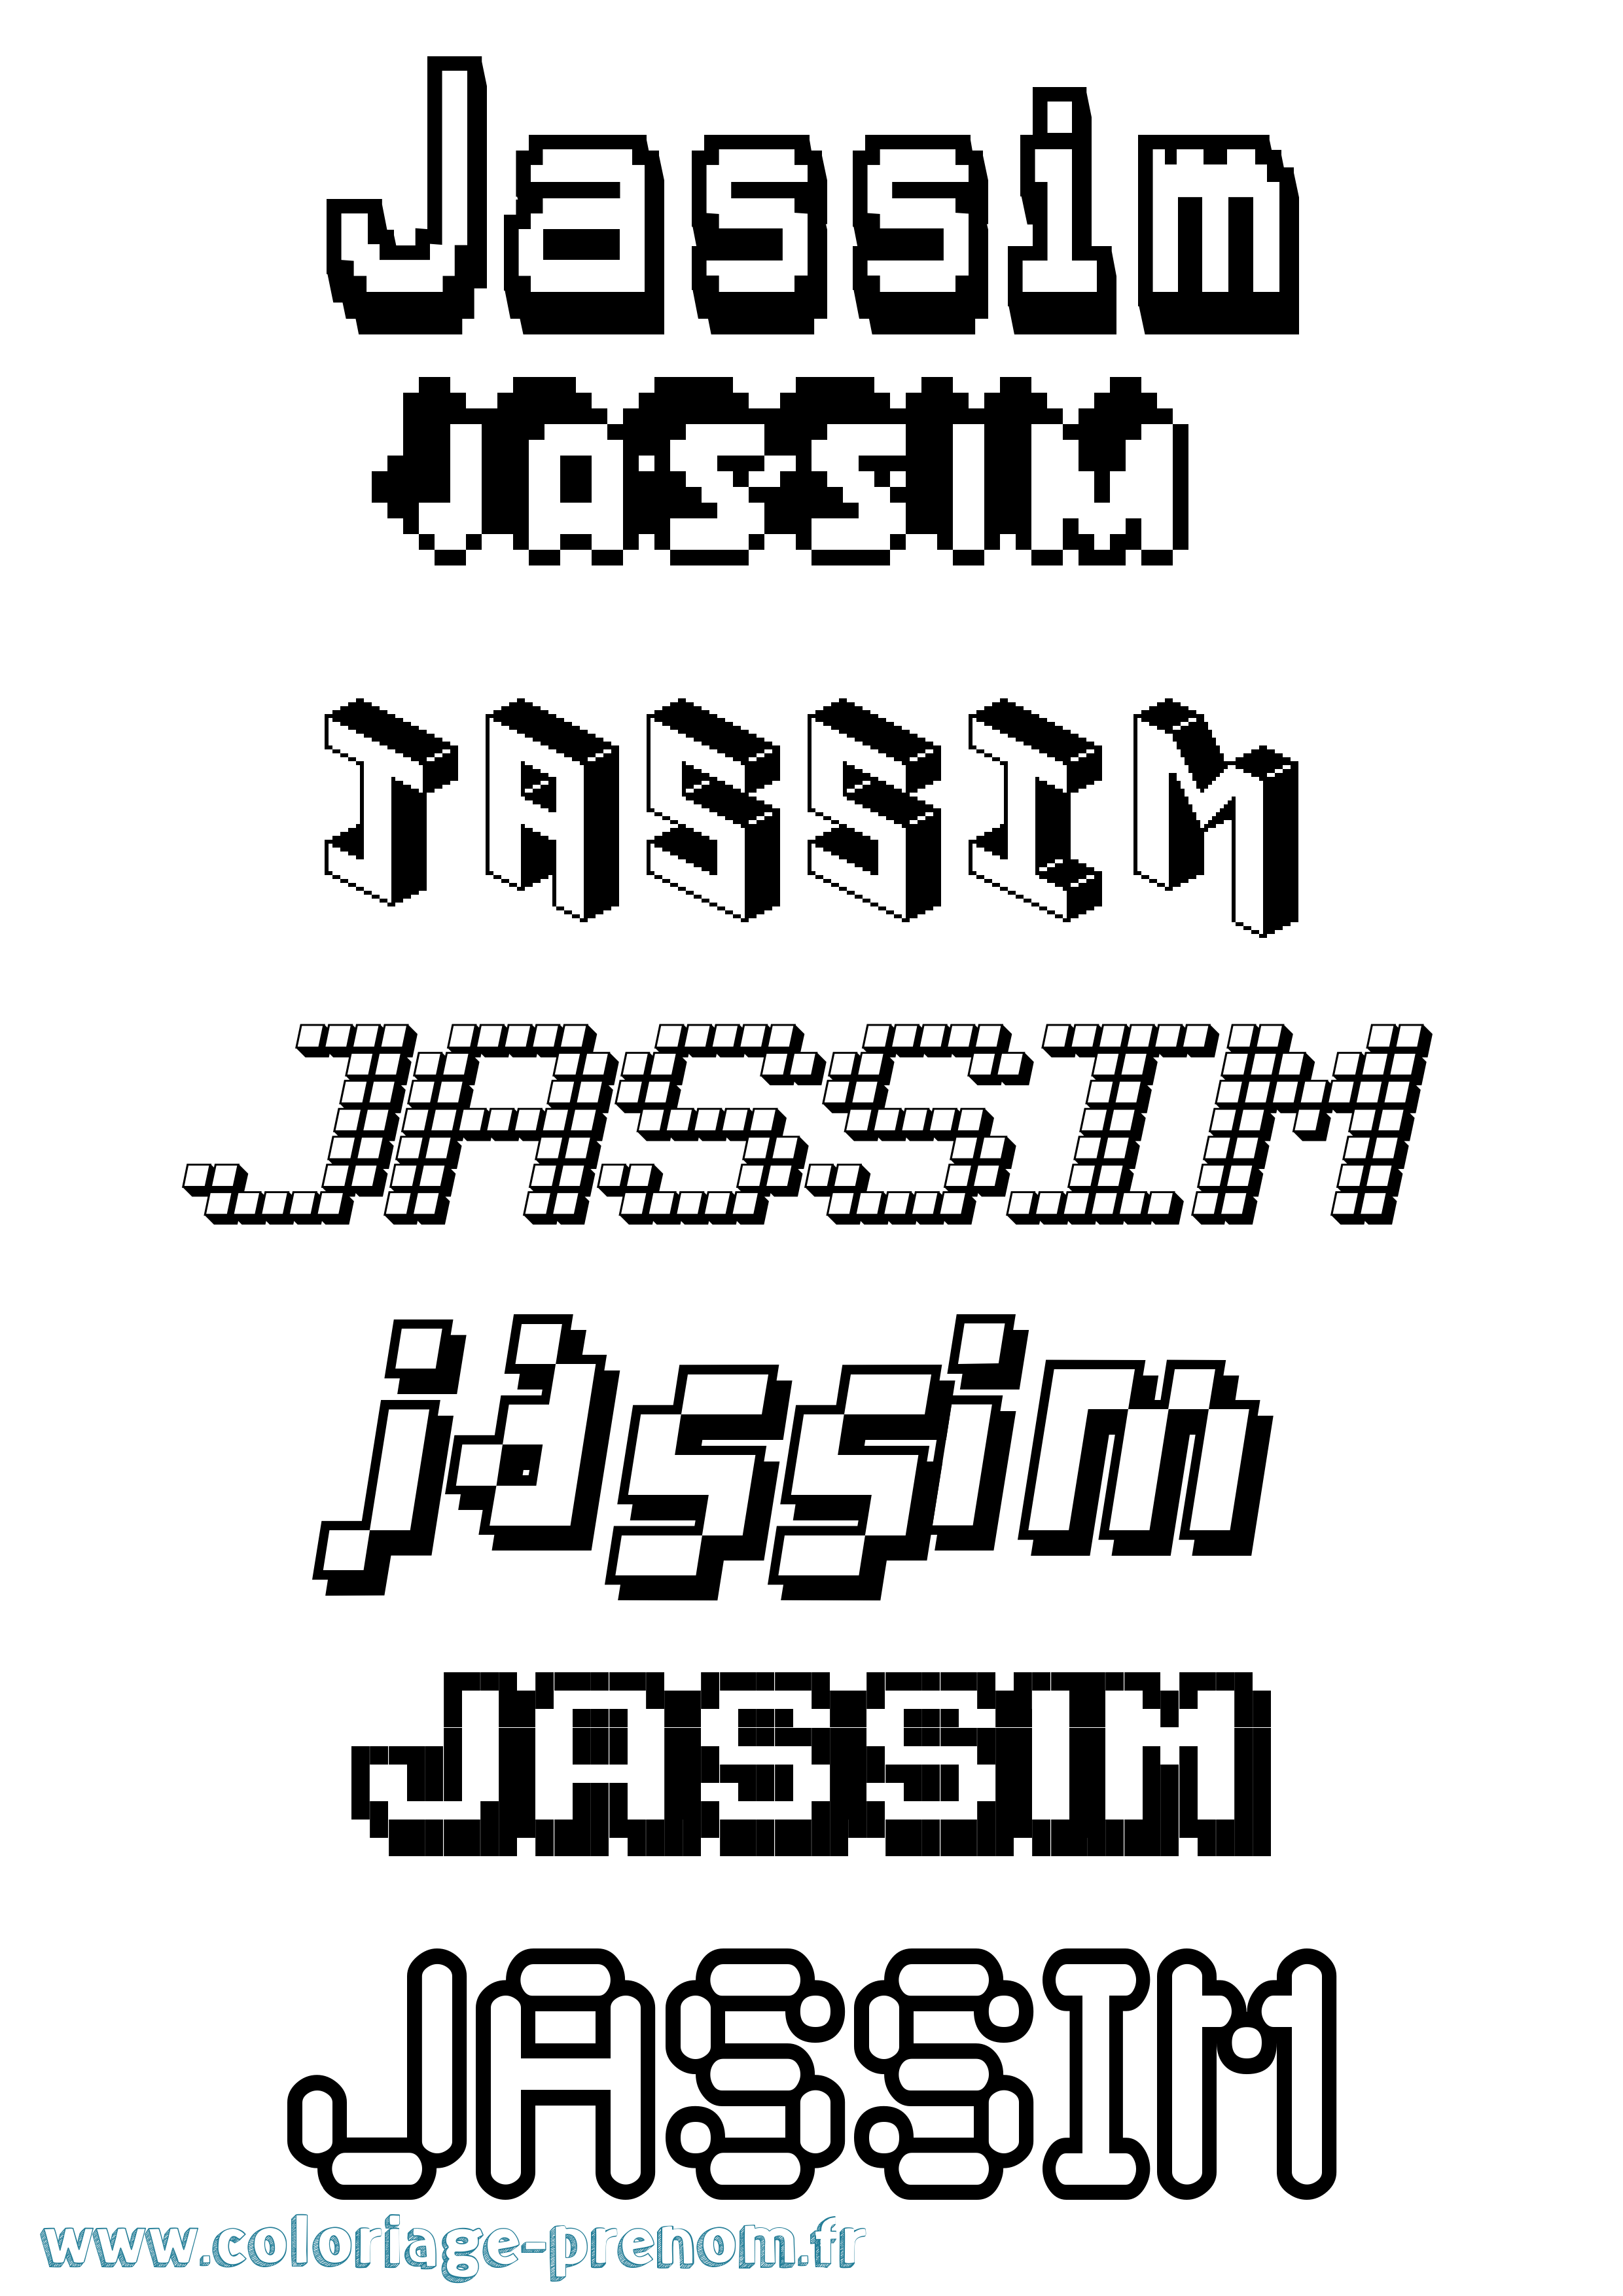 Coloriage prénom Jassim